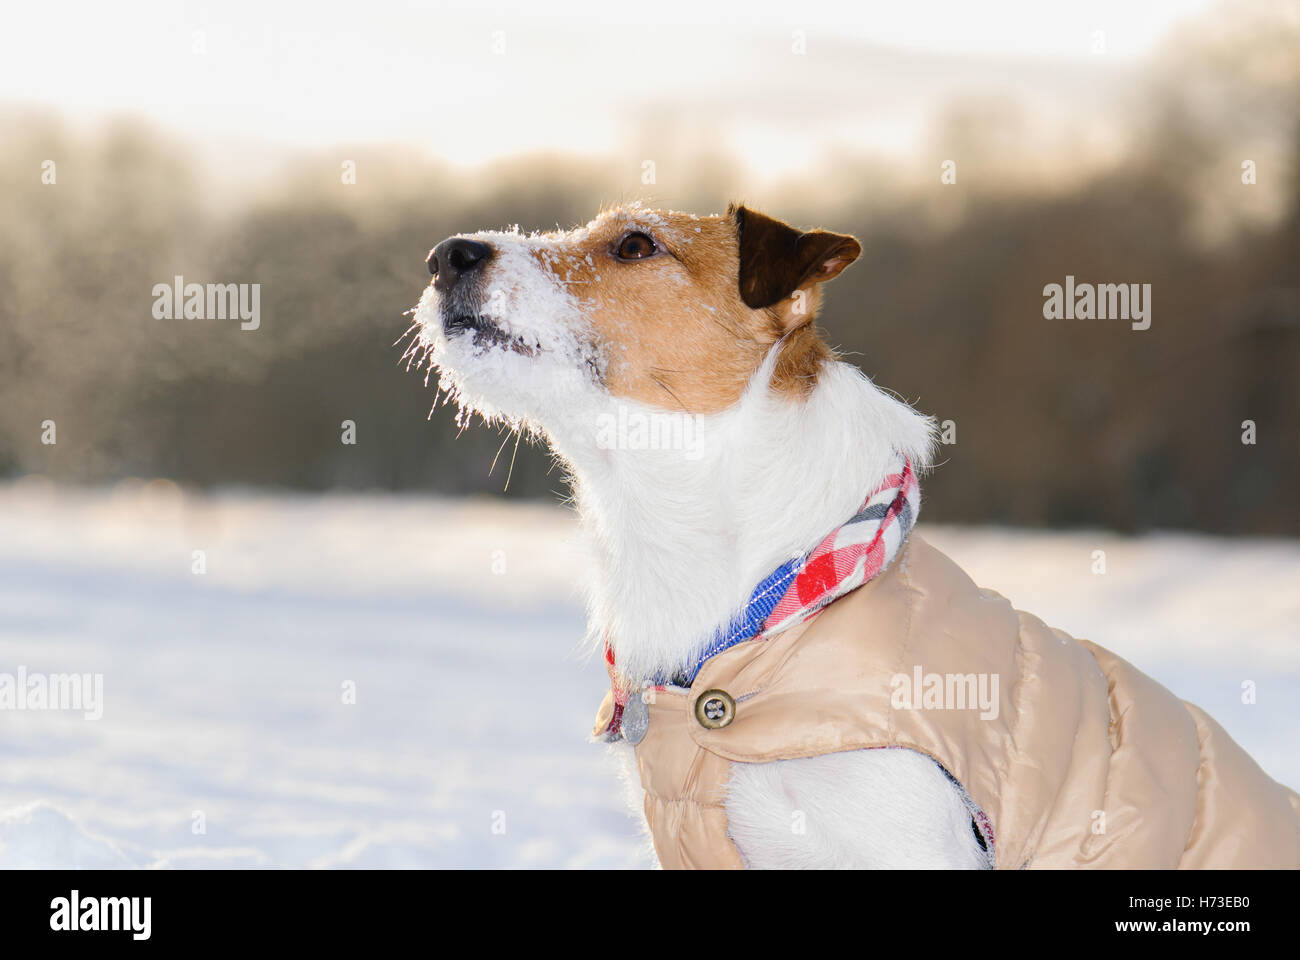 Gehorsamer Hund an kalten Tag tragen warme Jacke Kleidung Stockfoto